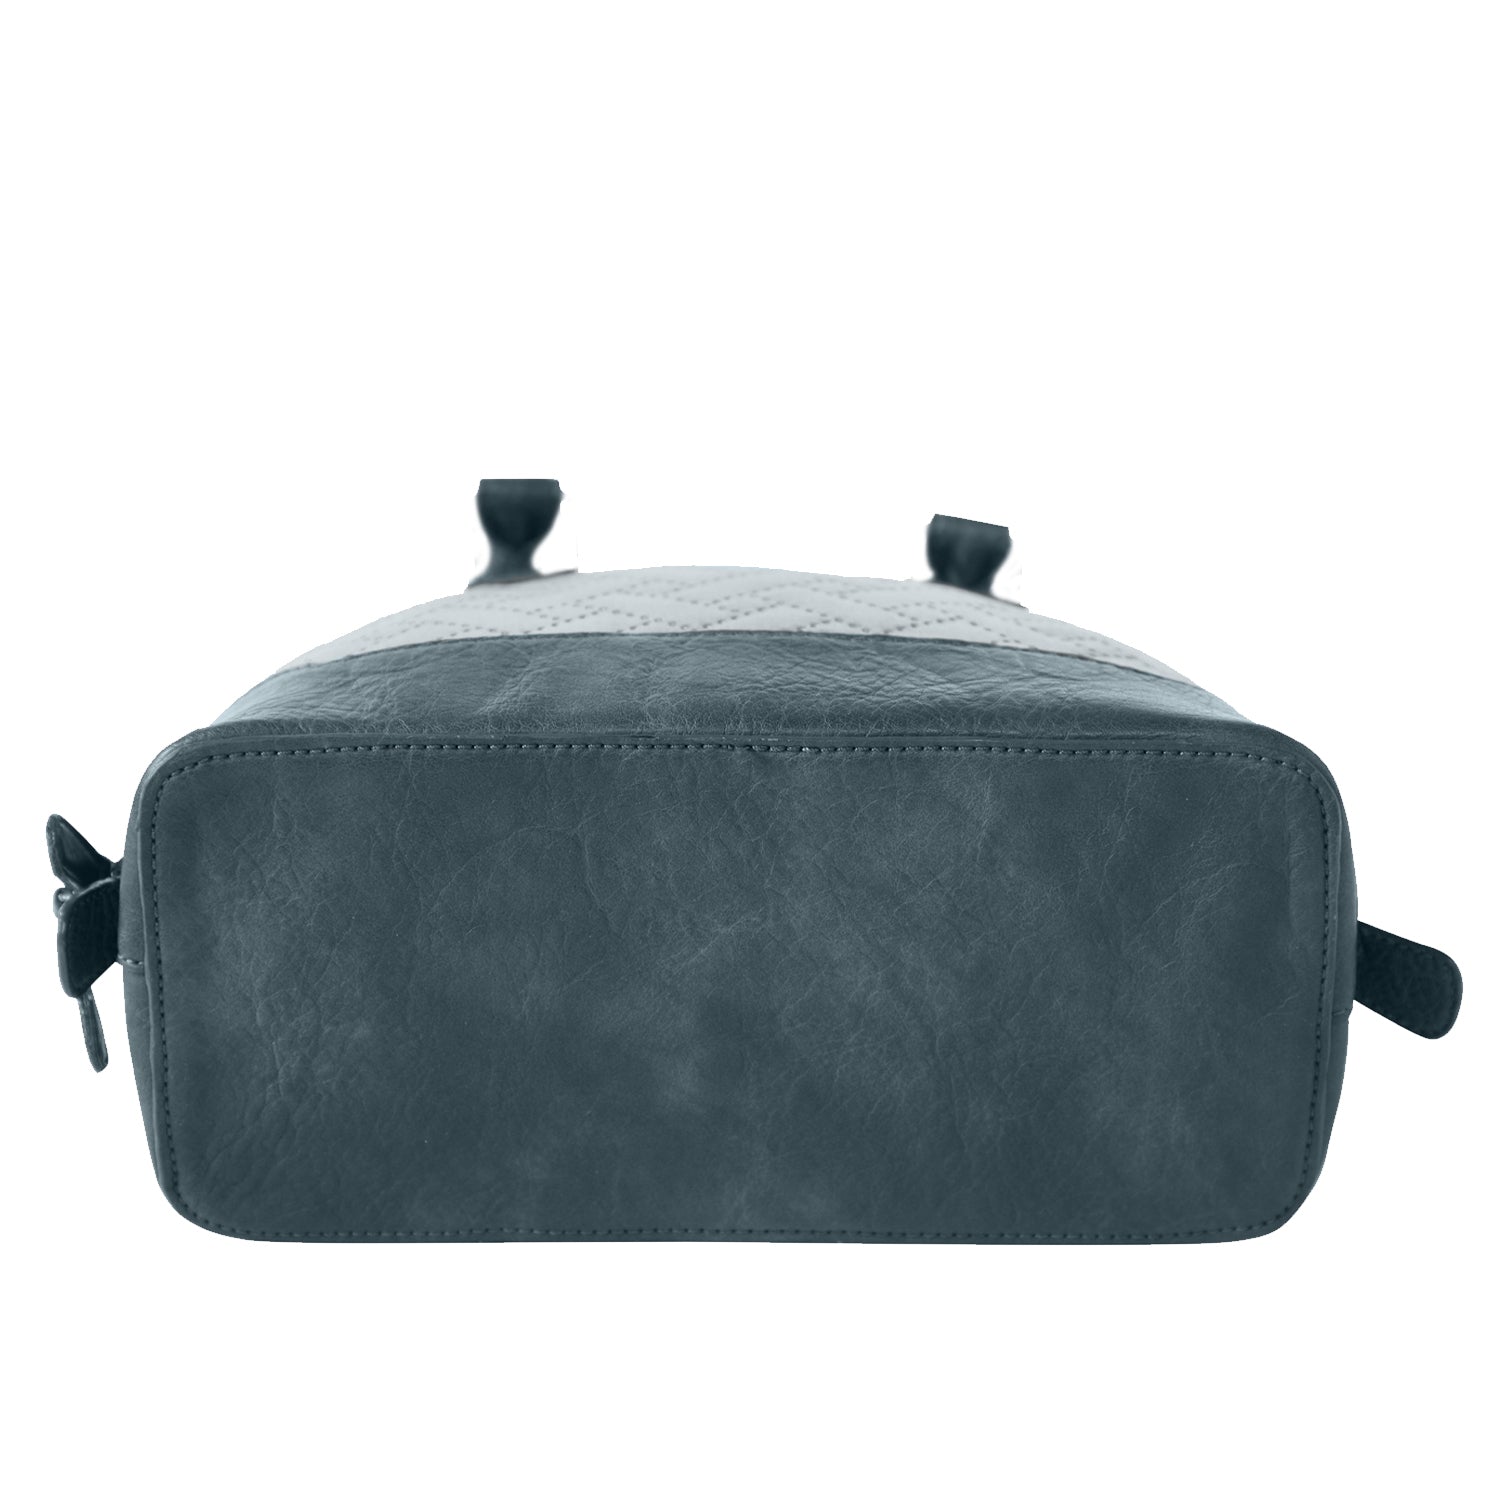 Mona-B Bag Mona B Small Handbag, Shoulder Bags For Shopping Travel With Stylish Design For Women: SEA - QRP-301 SEA